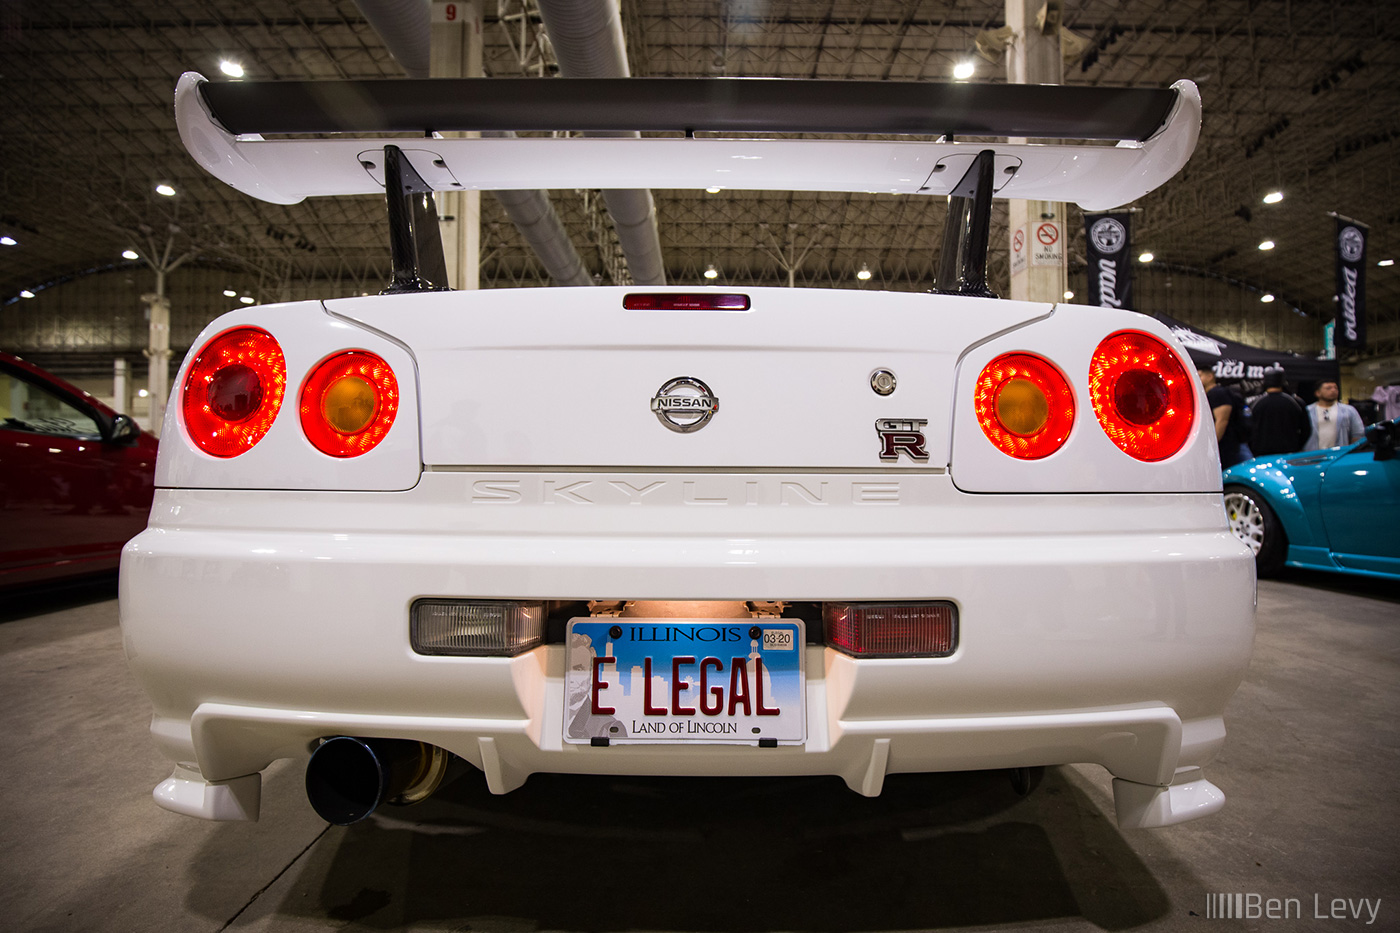 E Legal, White Nissan Skyline GT-R at Wekfest Chicago